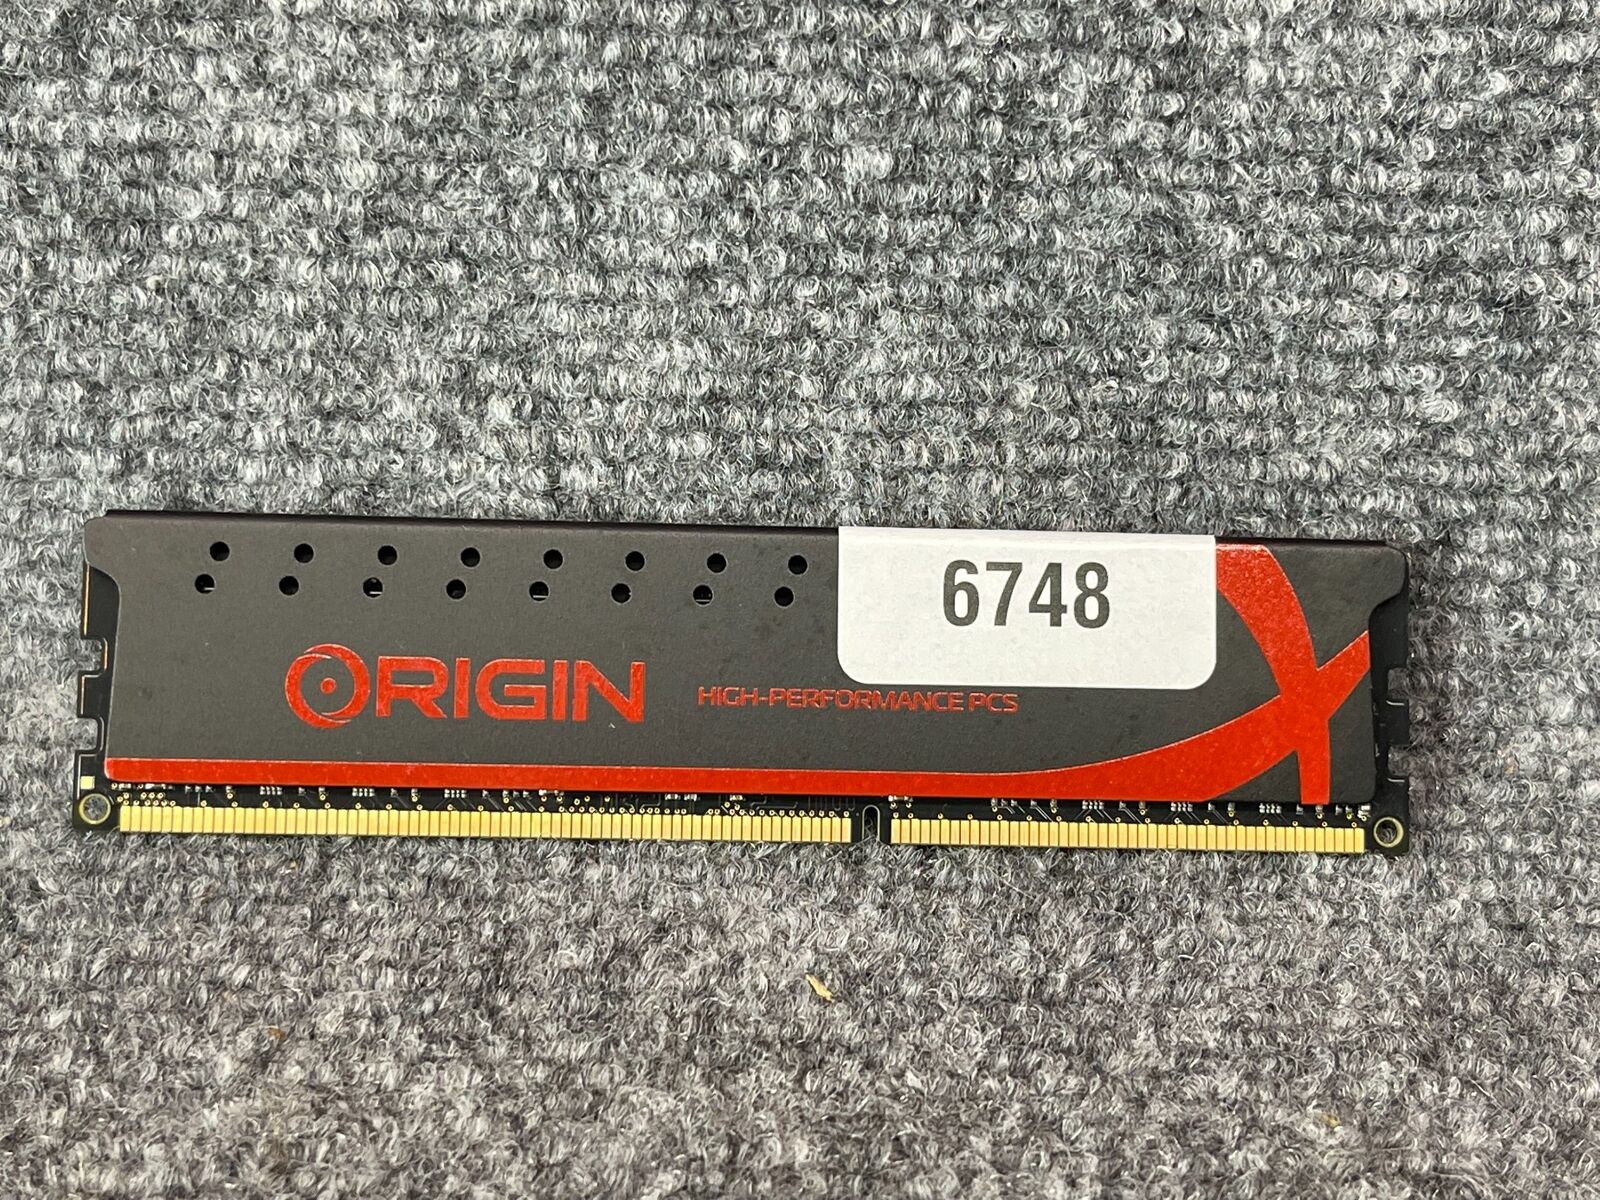 Kingston HyperX Genesis KHX16C9/8-OP DDR3 High-Performance Gaming PC RAM